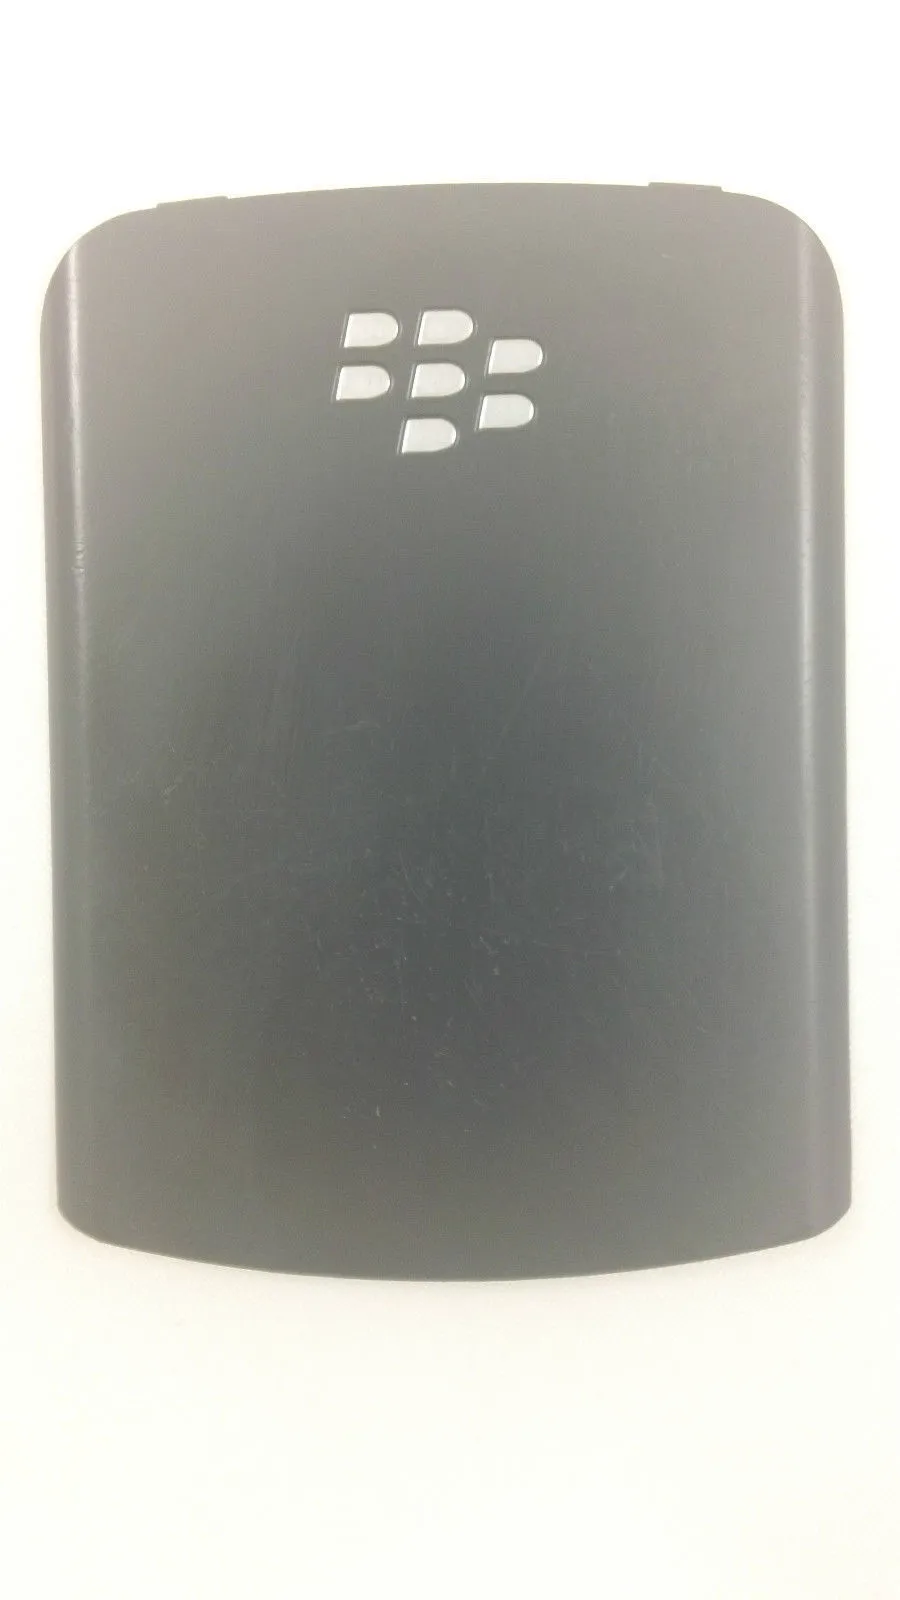 OEM Black Plastic Battery Door Back Cover Replacement Fits BlackBerry 8220